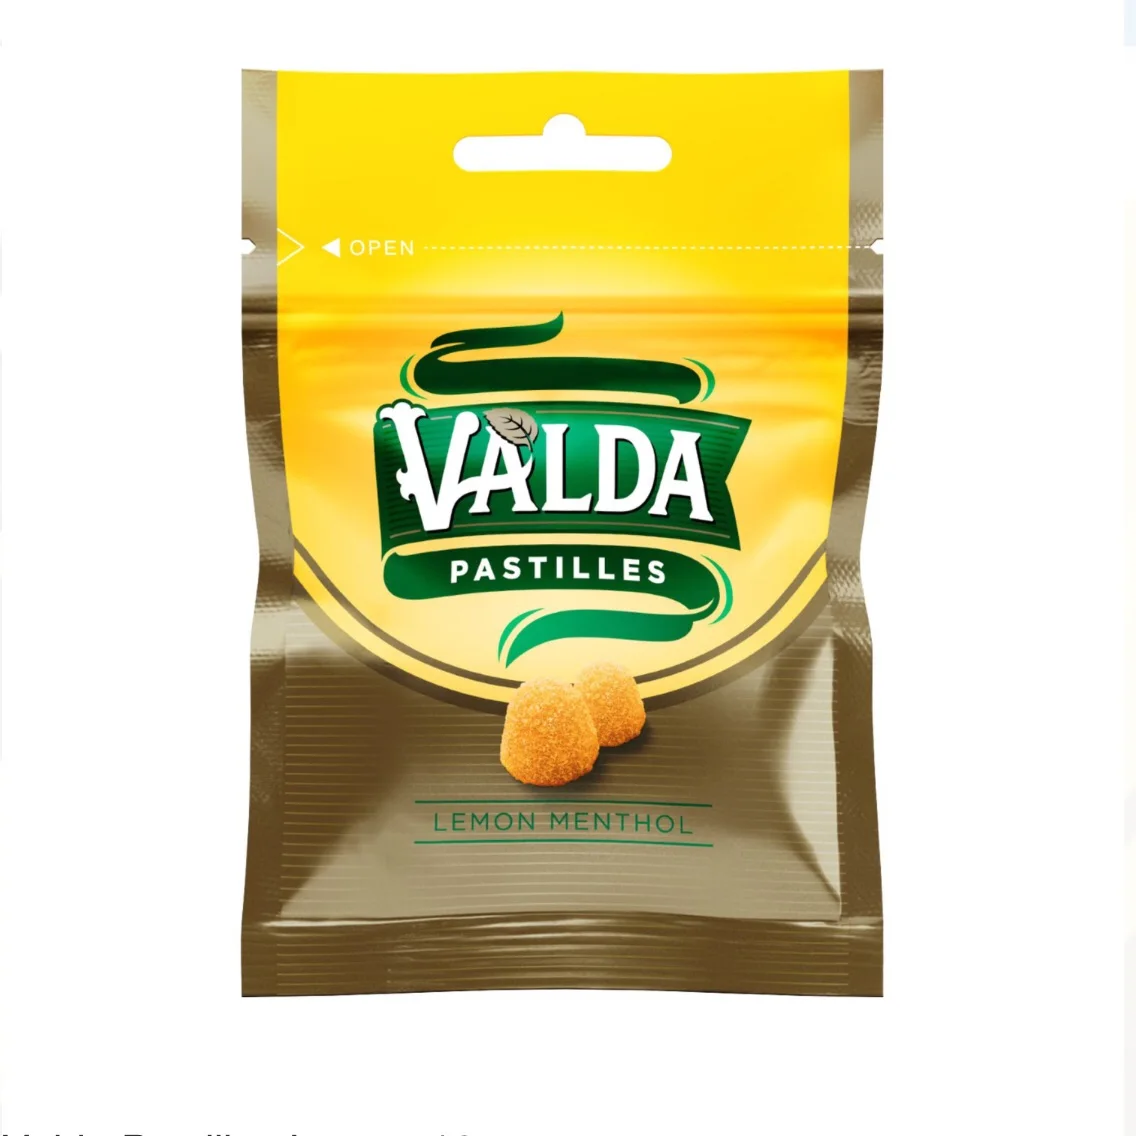 Valda Pastilles 20g Lemon